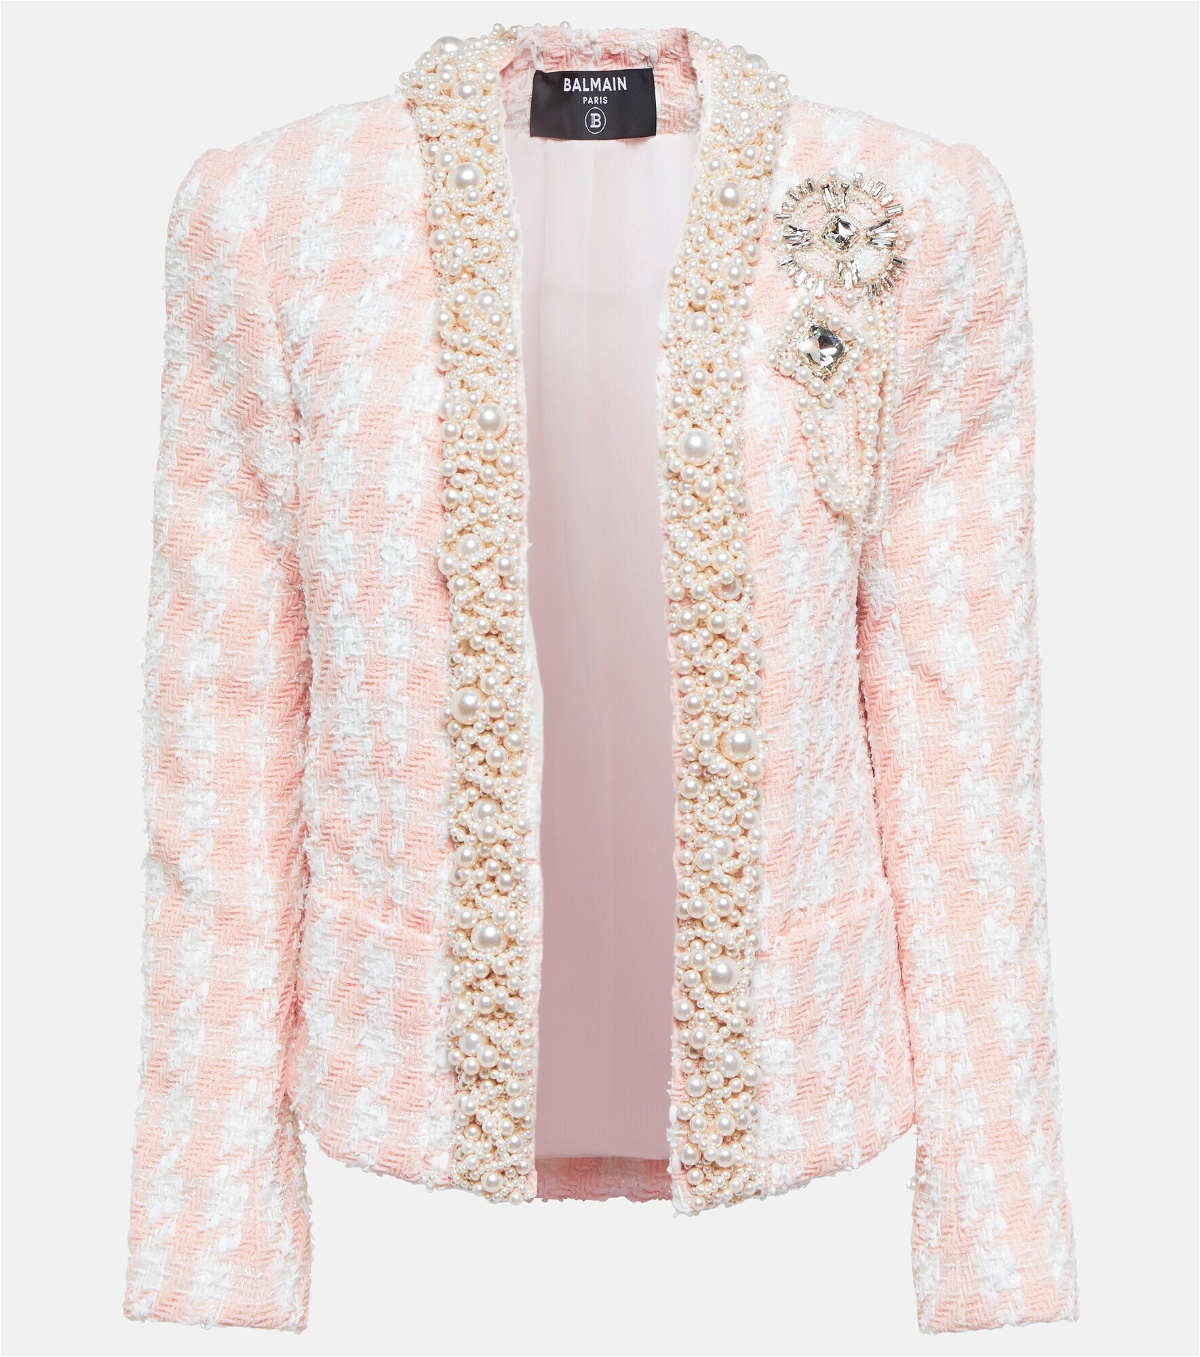 Balmain - Embellished tweed jacket Balmain